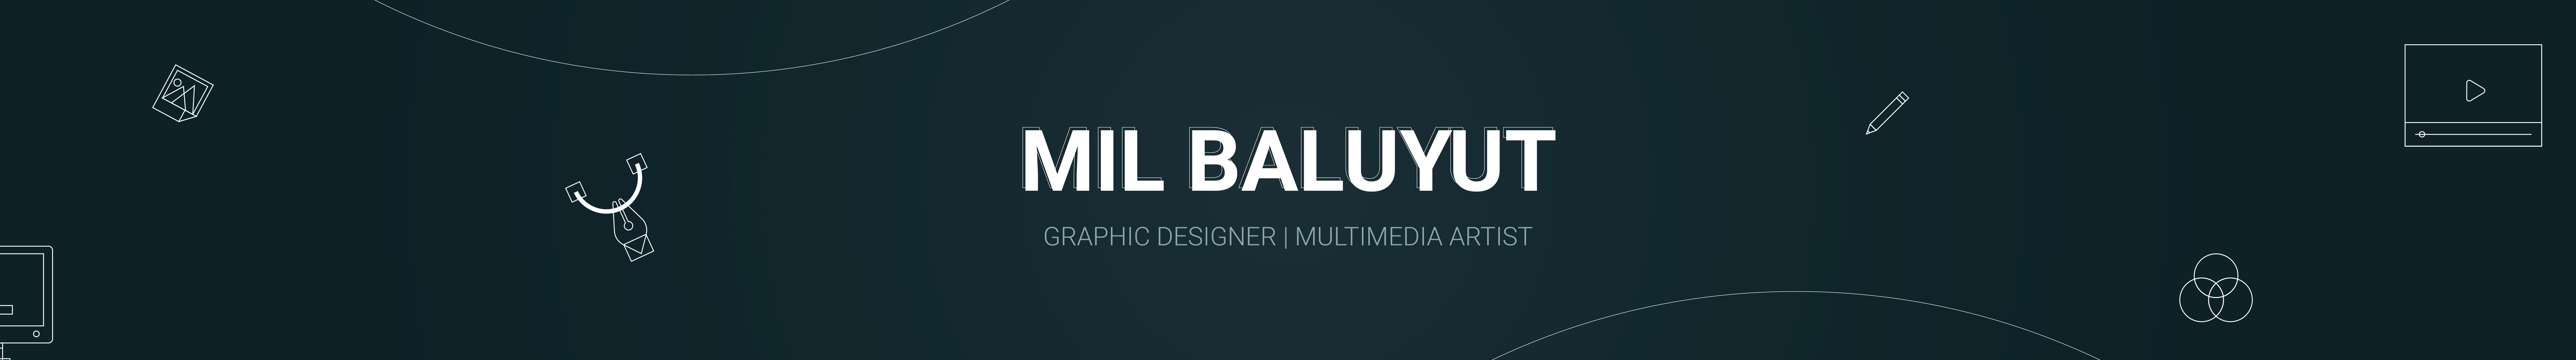 Mil Baluyut's profile banner